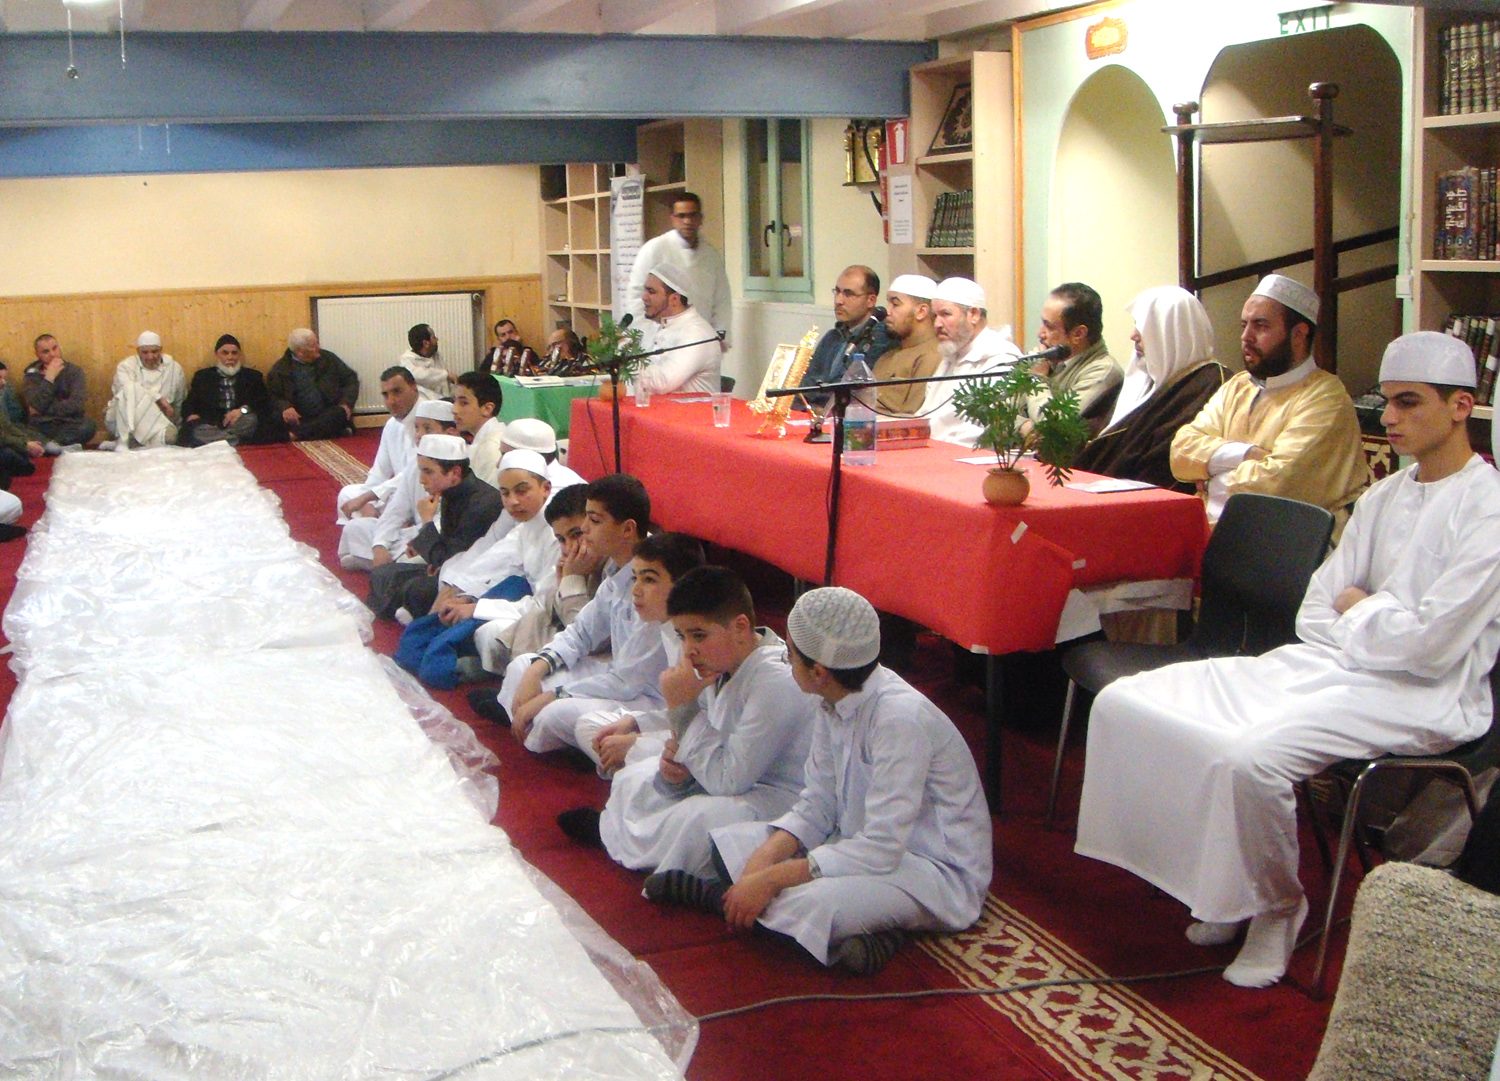 Islamic Academy in Belgium celebrates 25th anniversary in Quran teaching